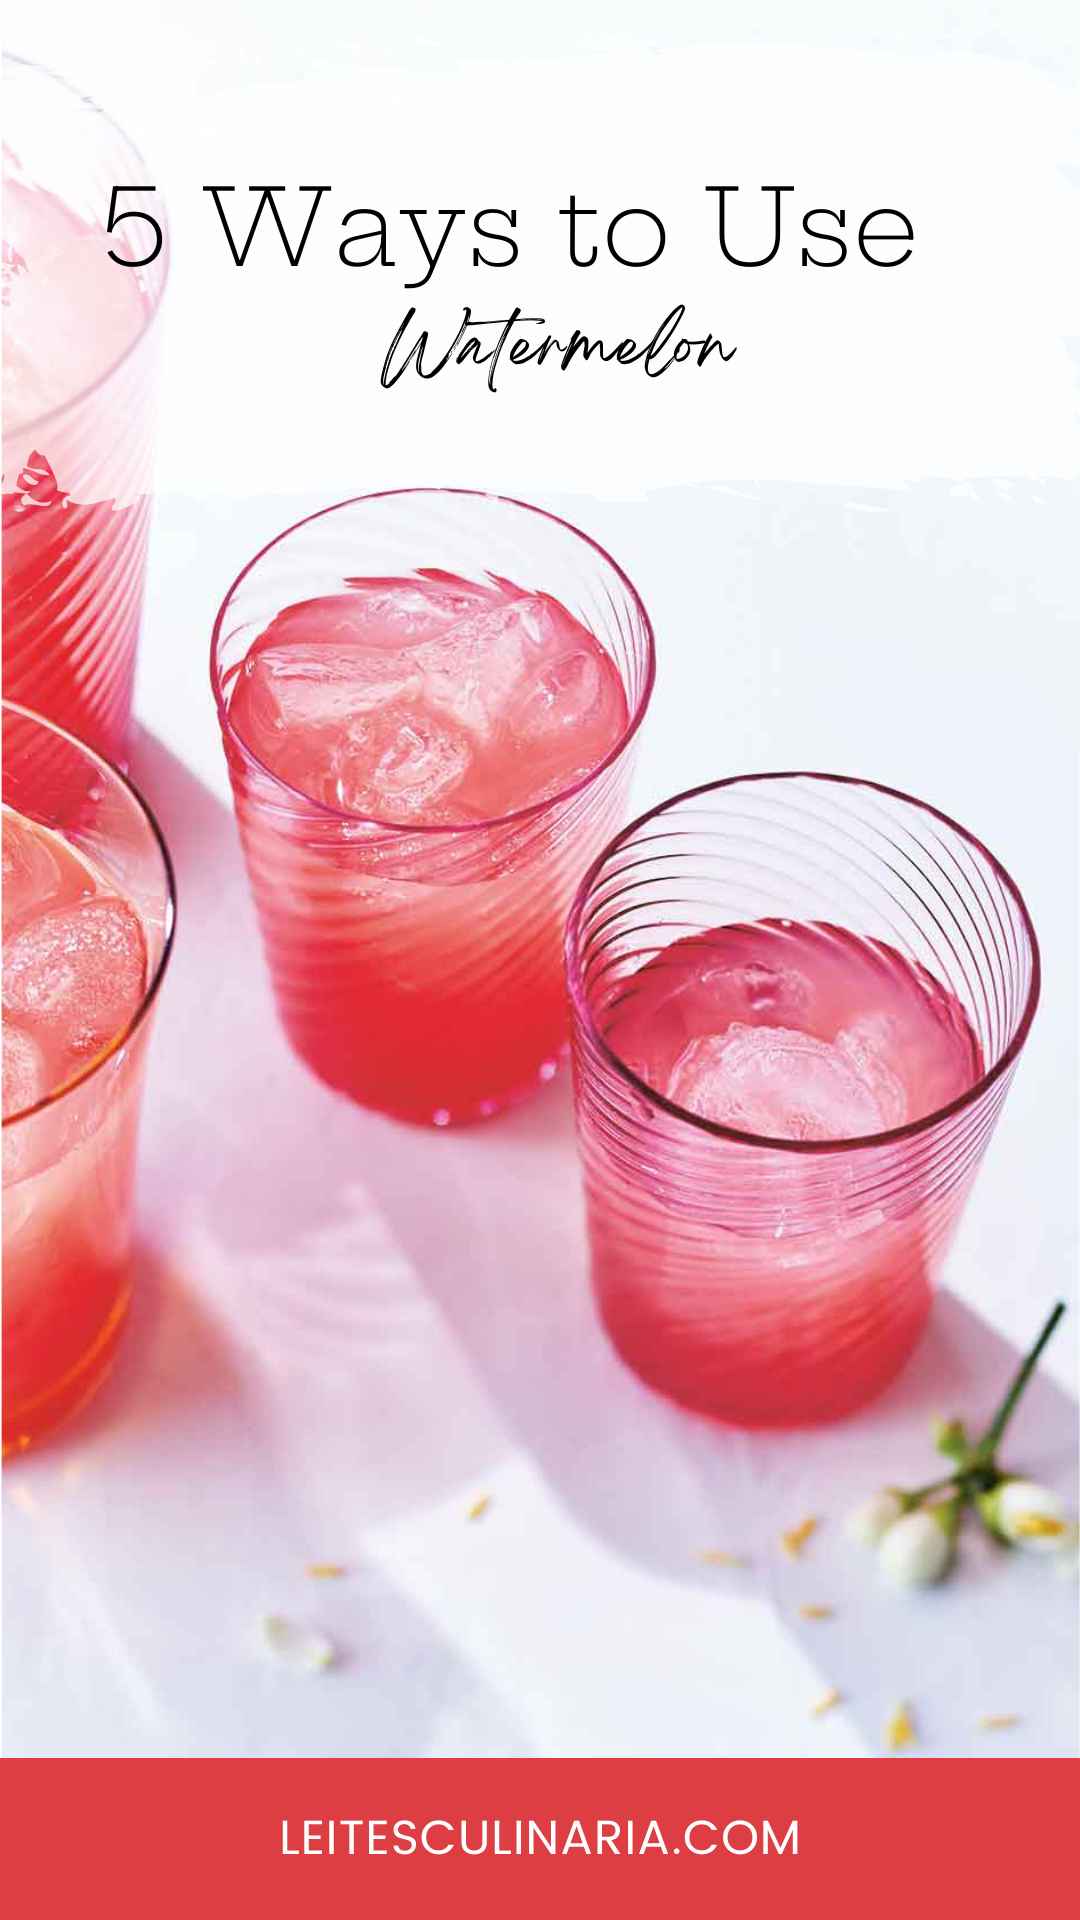 Several glasses of watermelon lemonade.